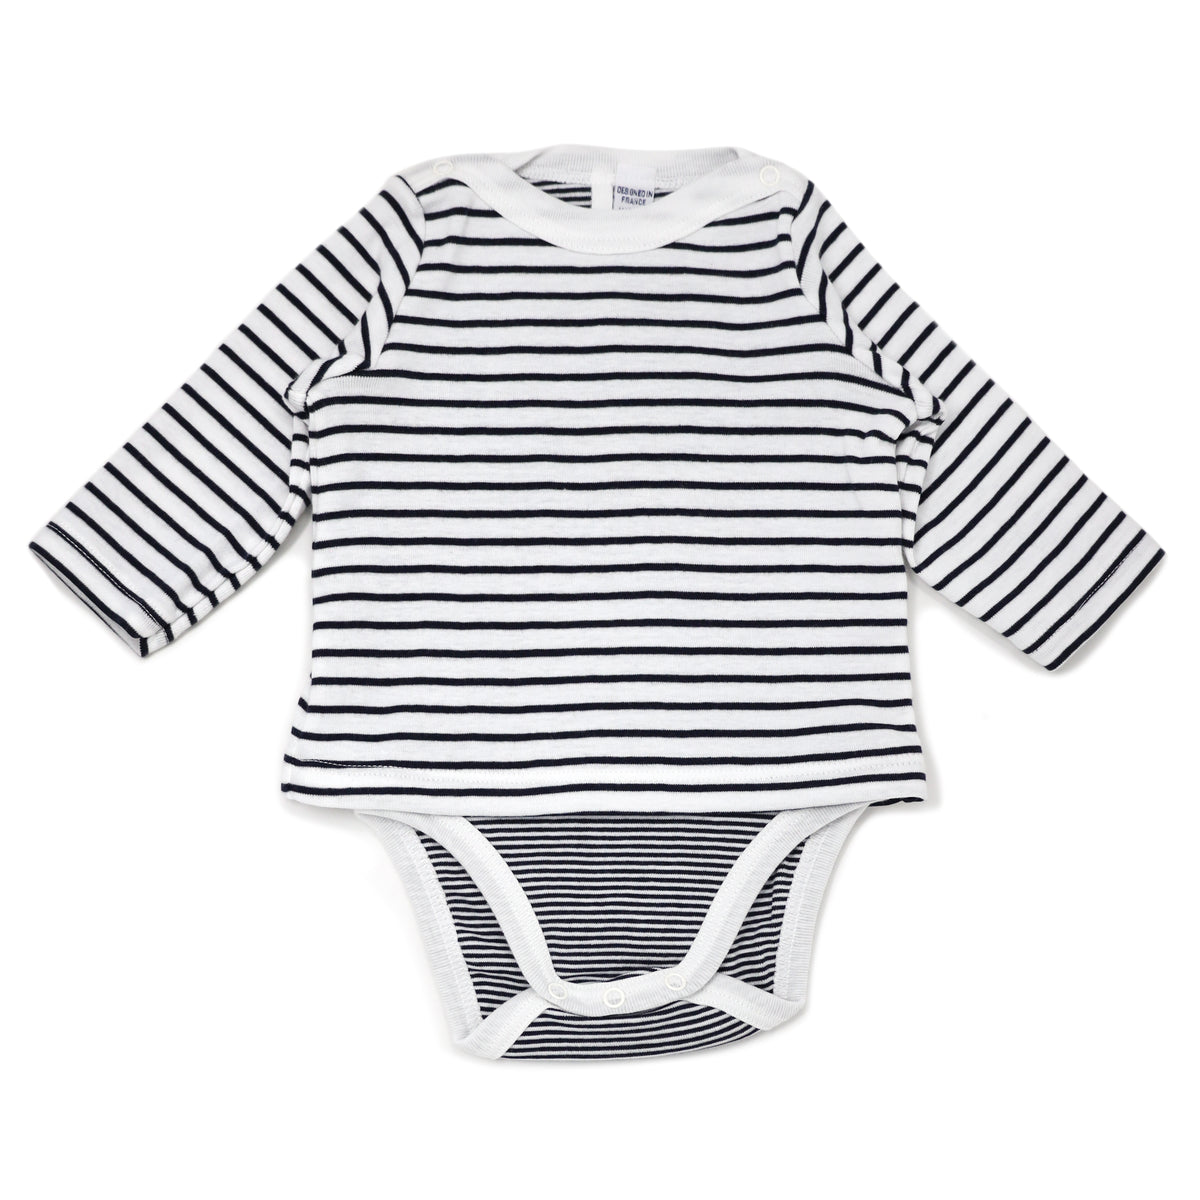 Petit Bateau Baby Long Sleeve Striped Bodysuit Top - Navy